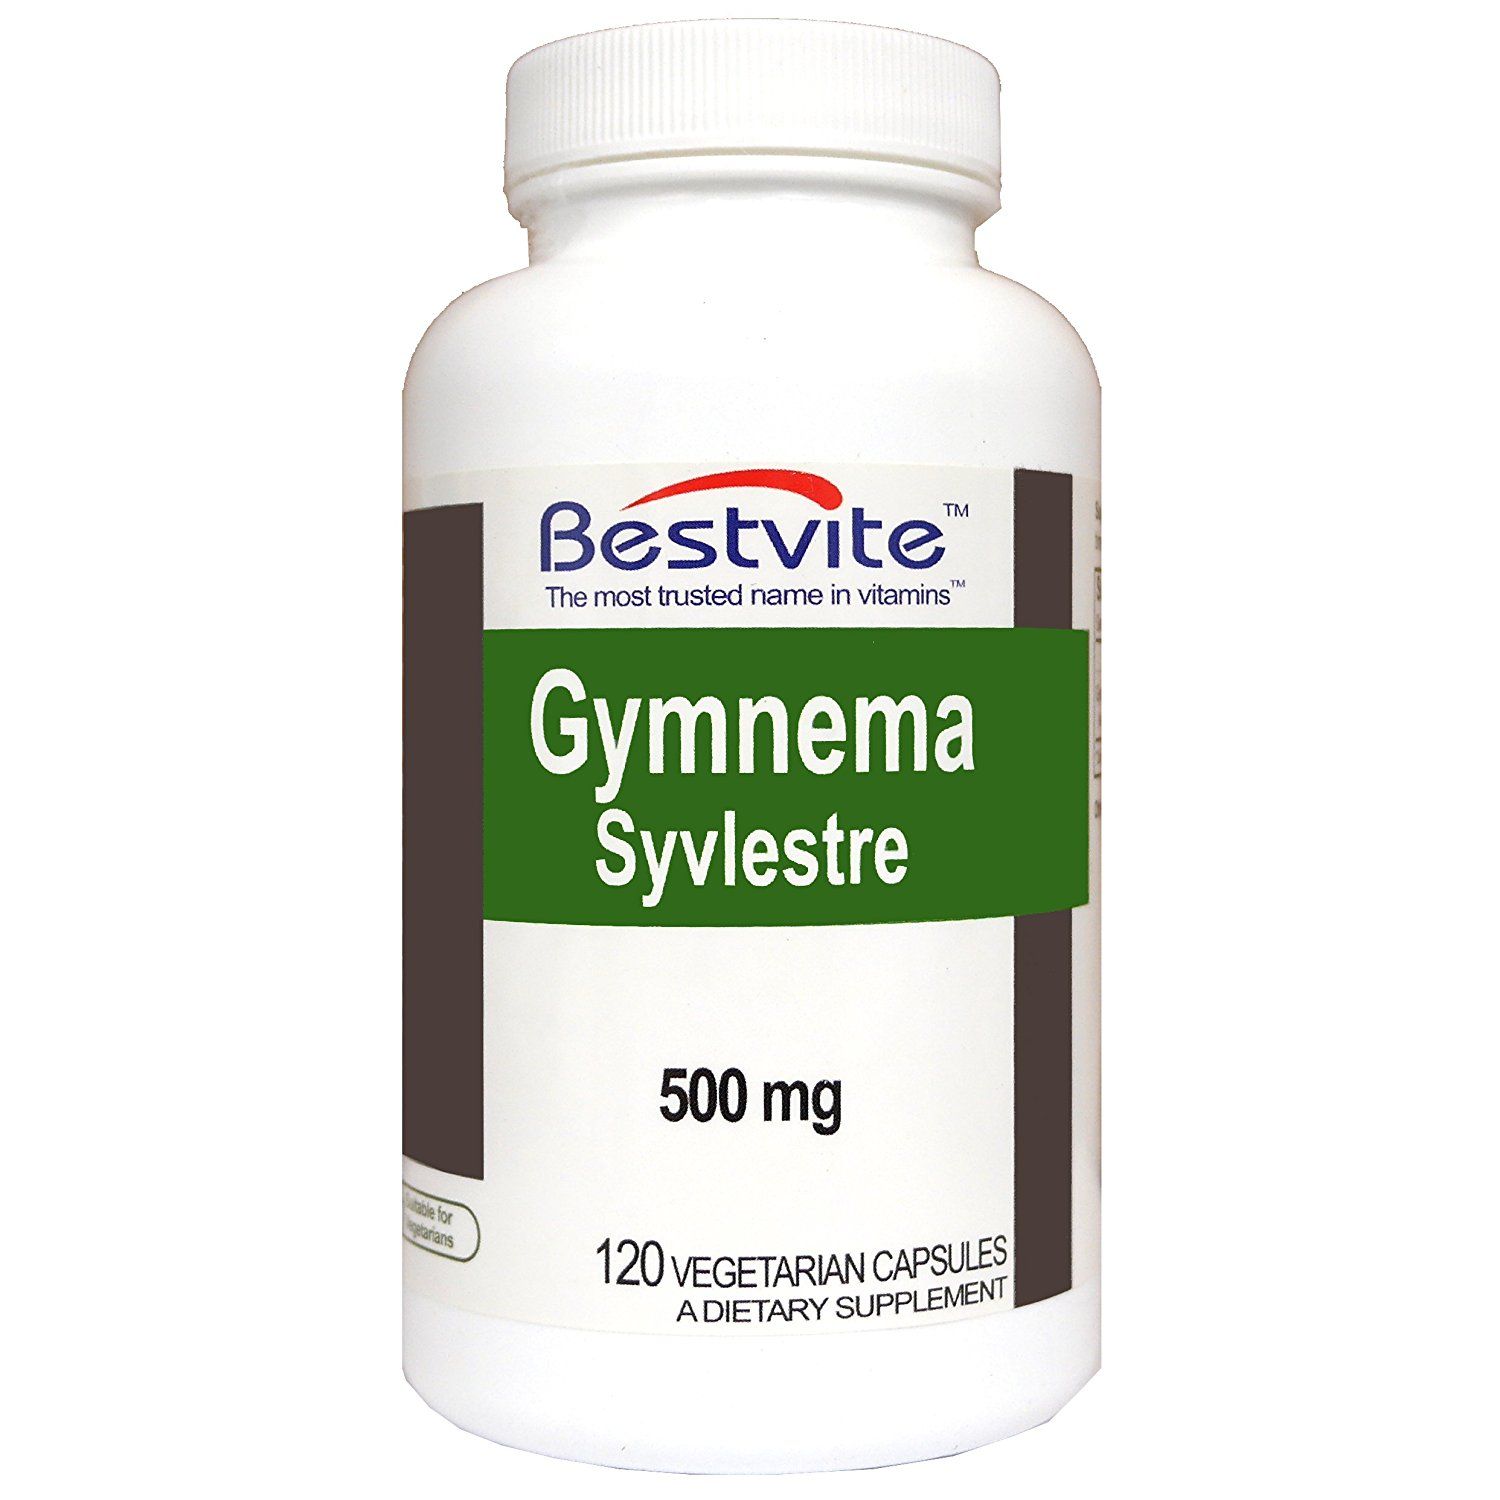 Benefits of Gymmema Supplements